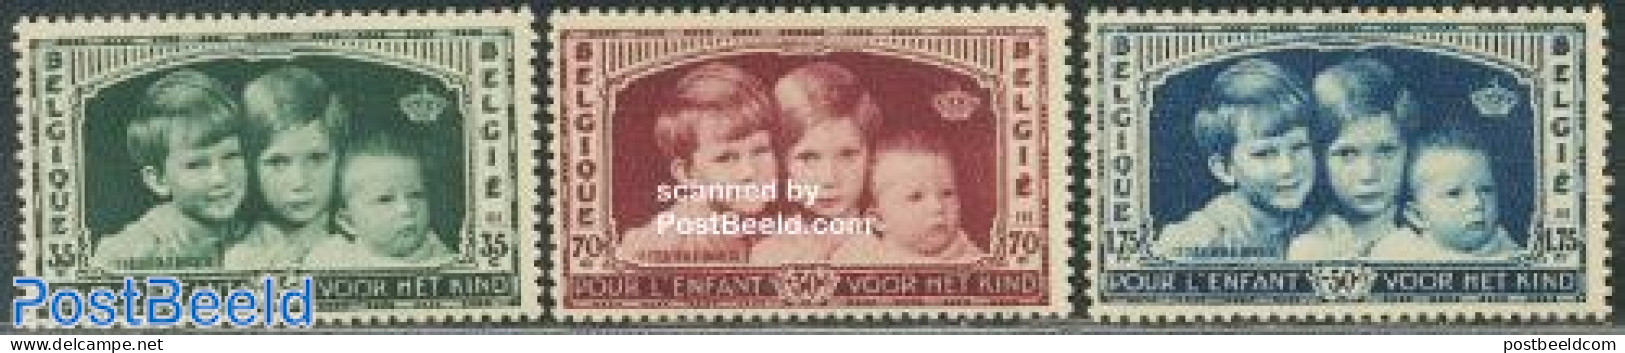 Belgium 1935 National Aid 3v, Unused (hinged), History - Kings & Queens (Royalty) - Nuevos